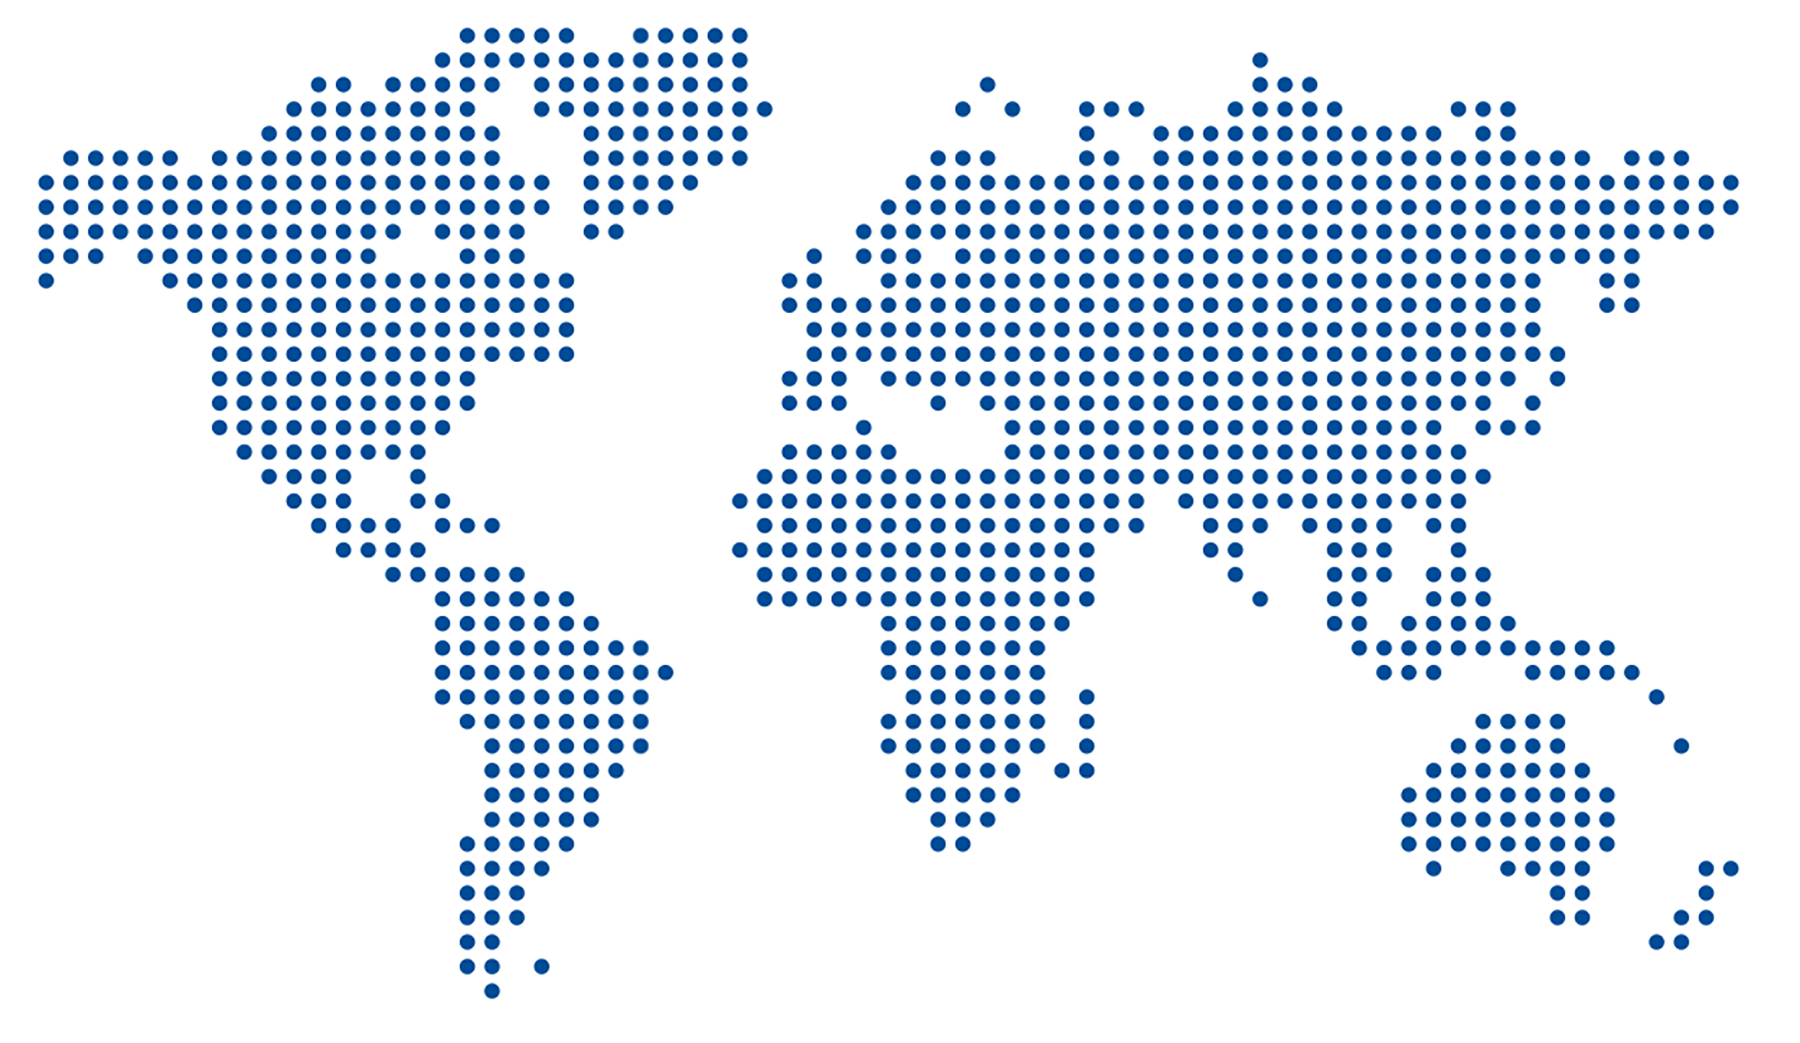 PepsiCo Global Map (1)